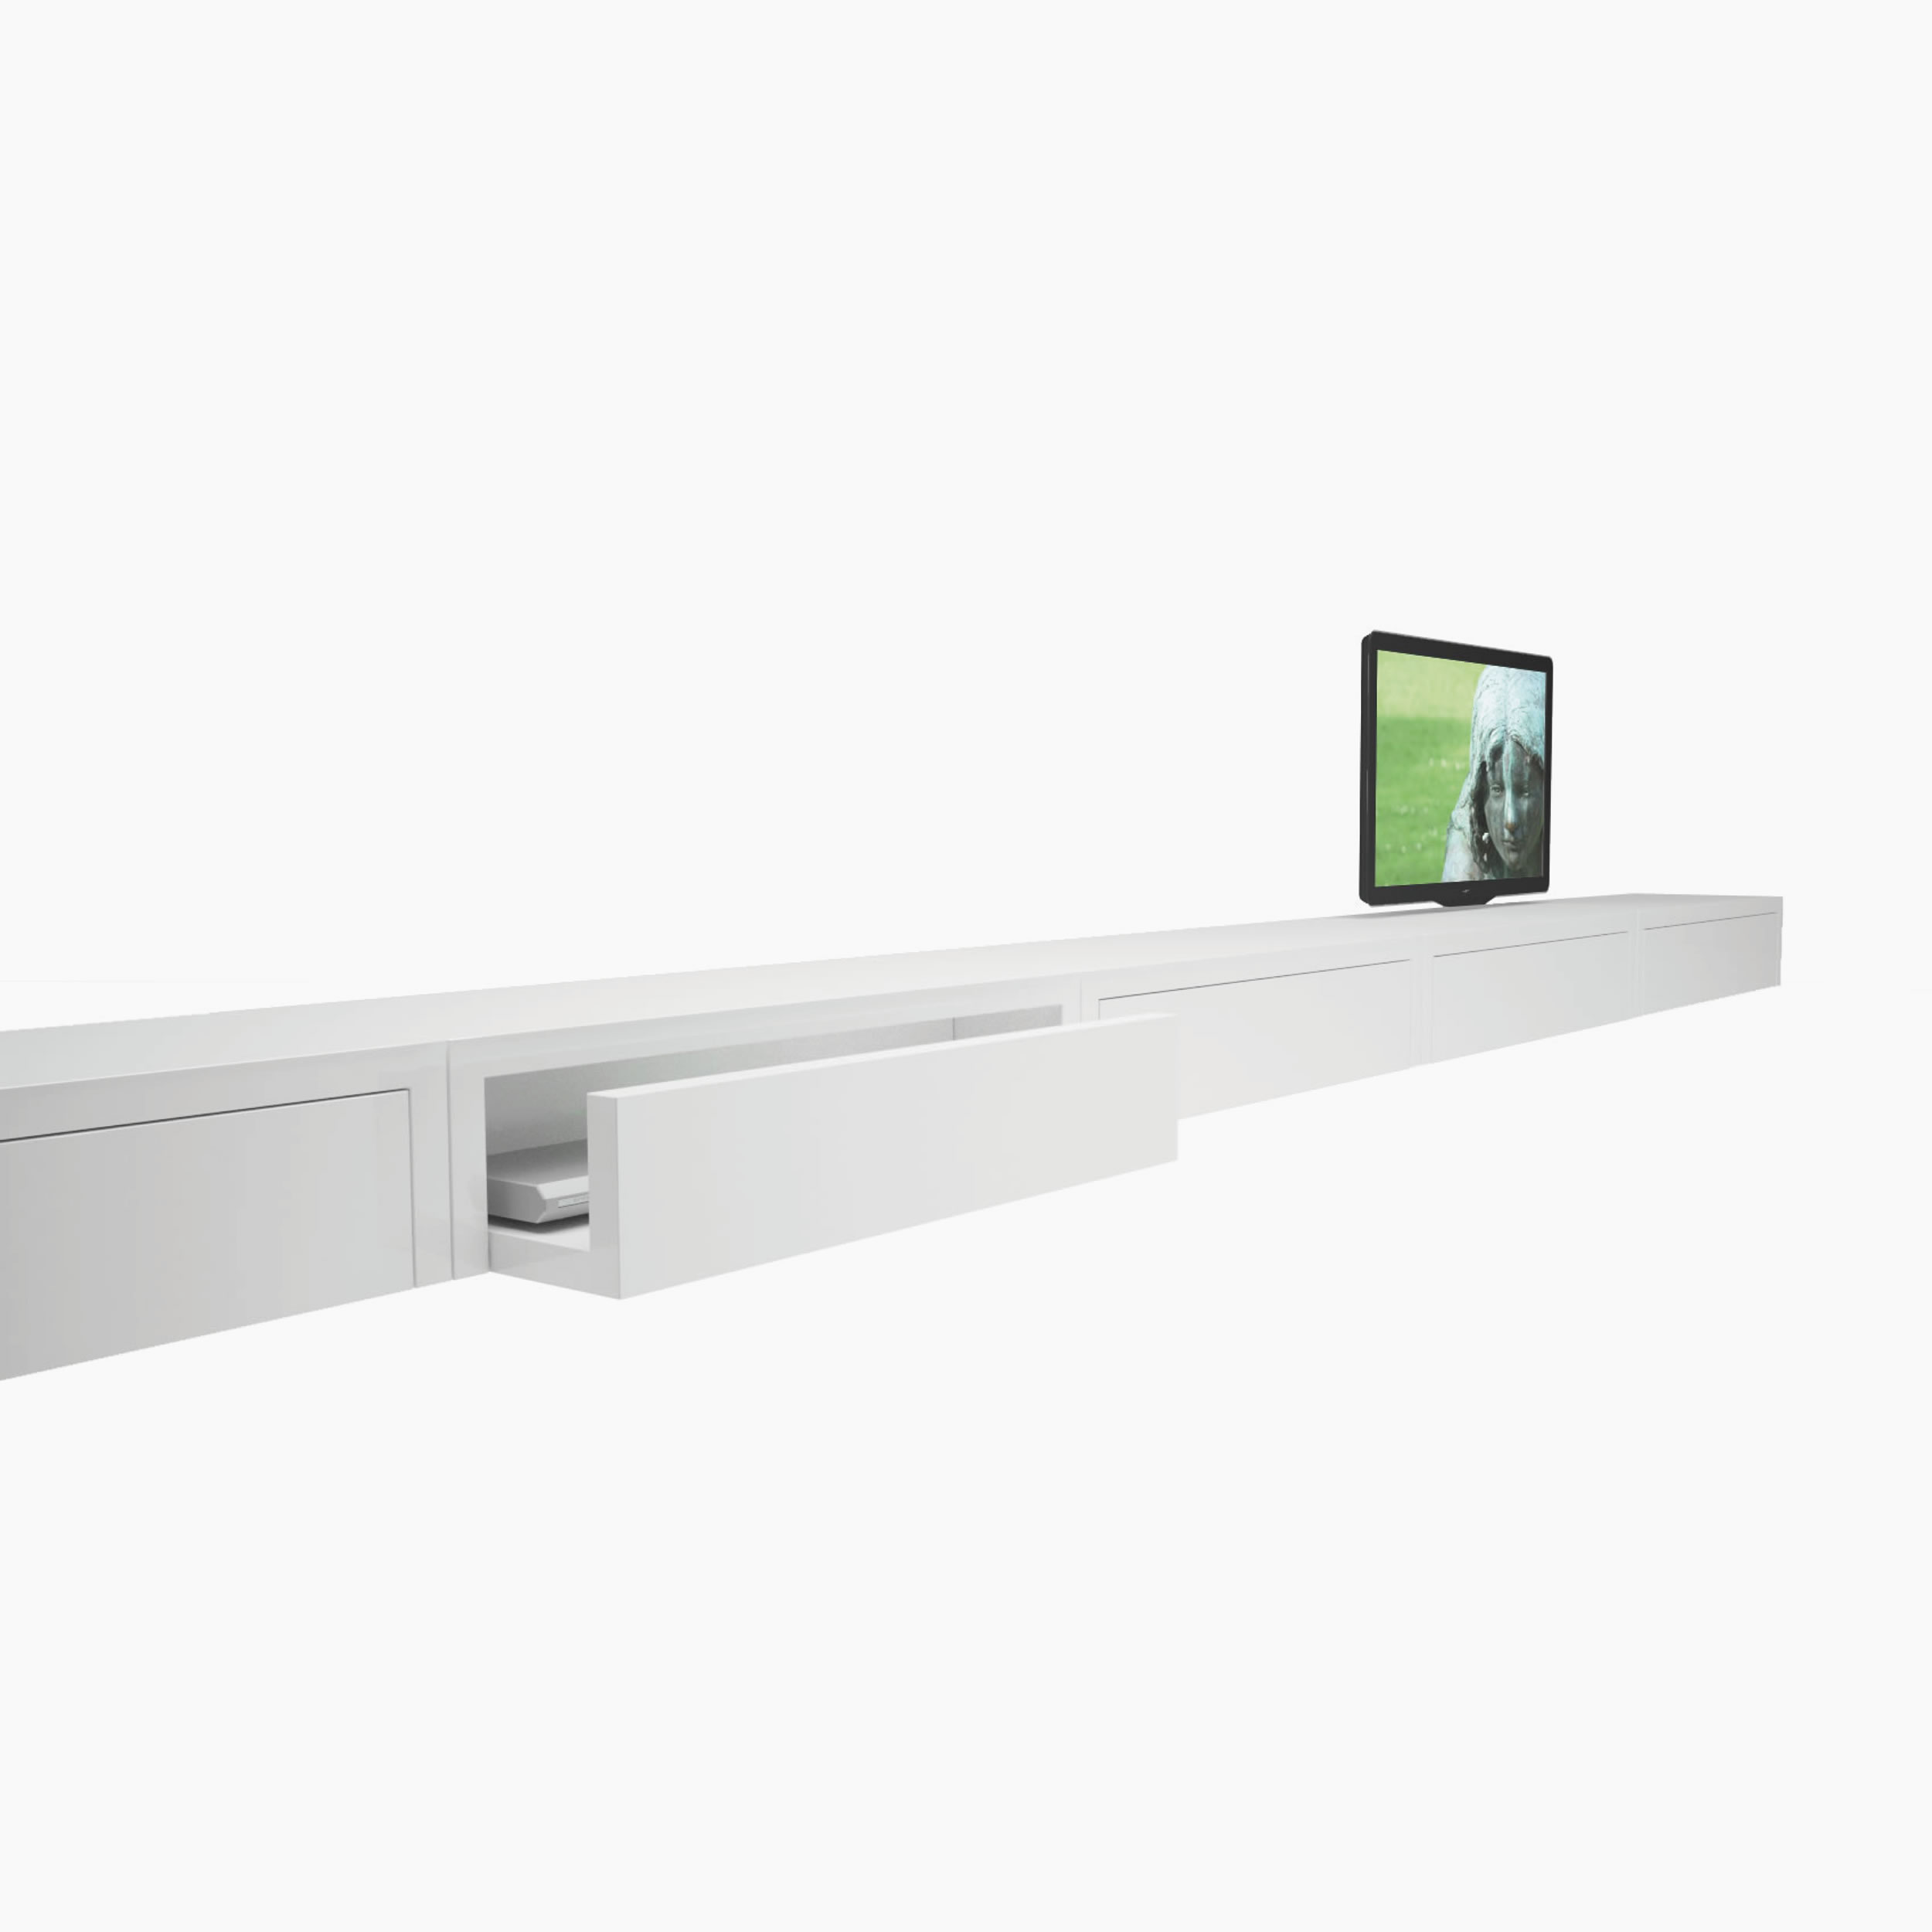 Sideboard quader weiss bed room Buero minimalist design Sideboards FS 51 FELIX SCHWAKE